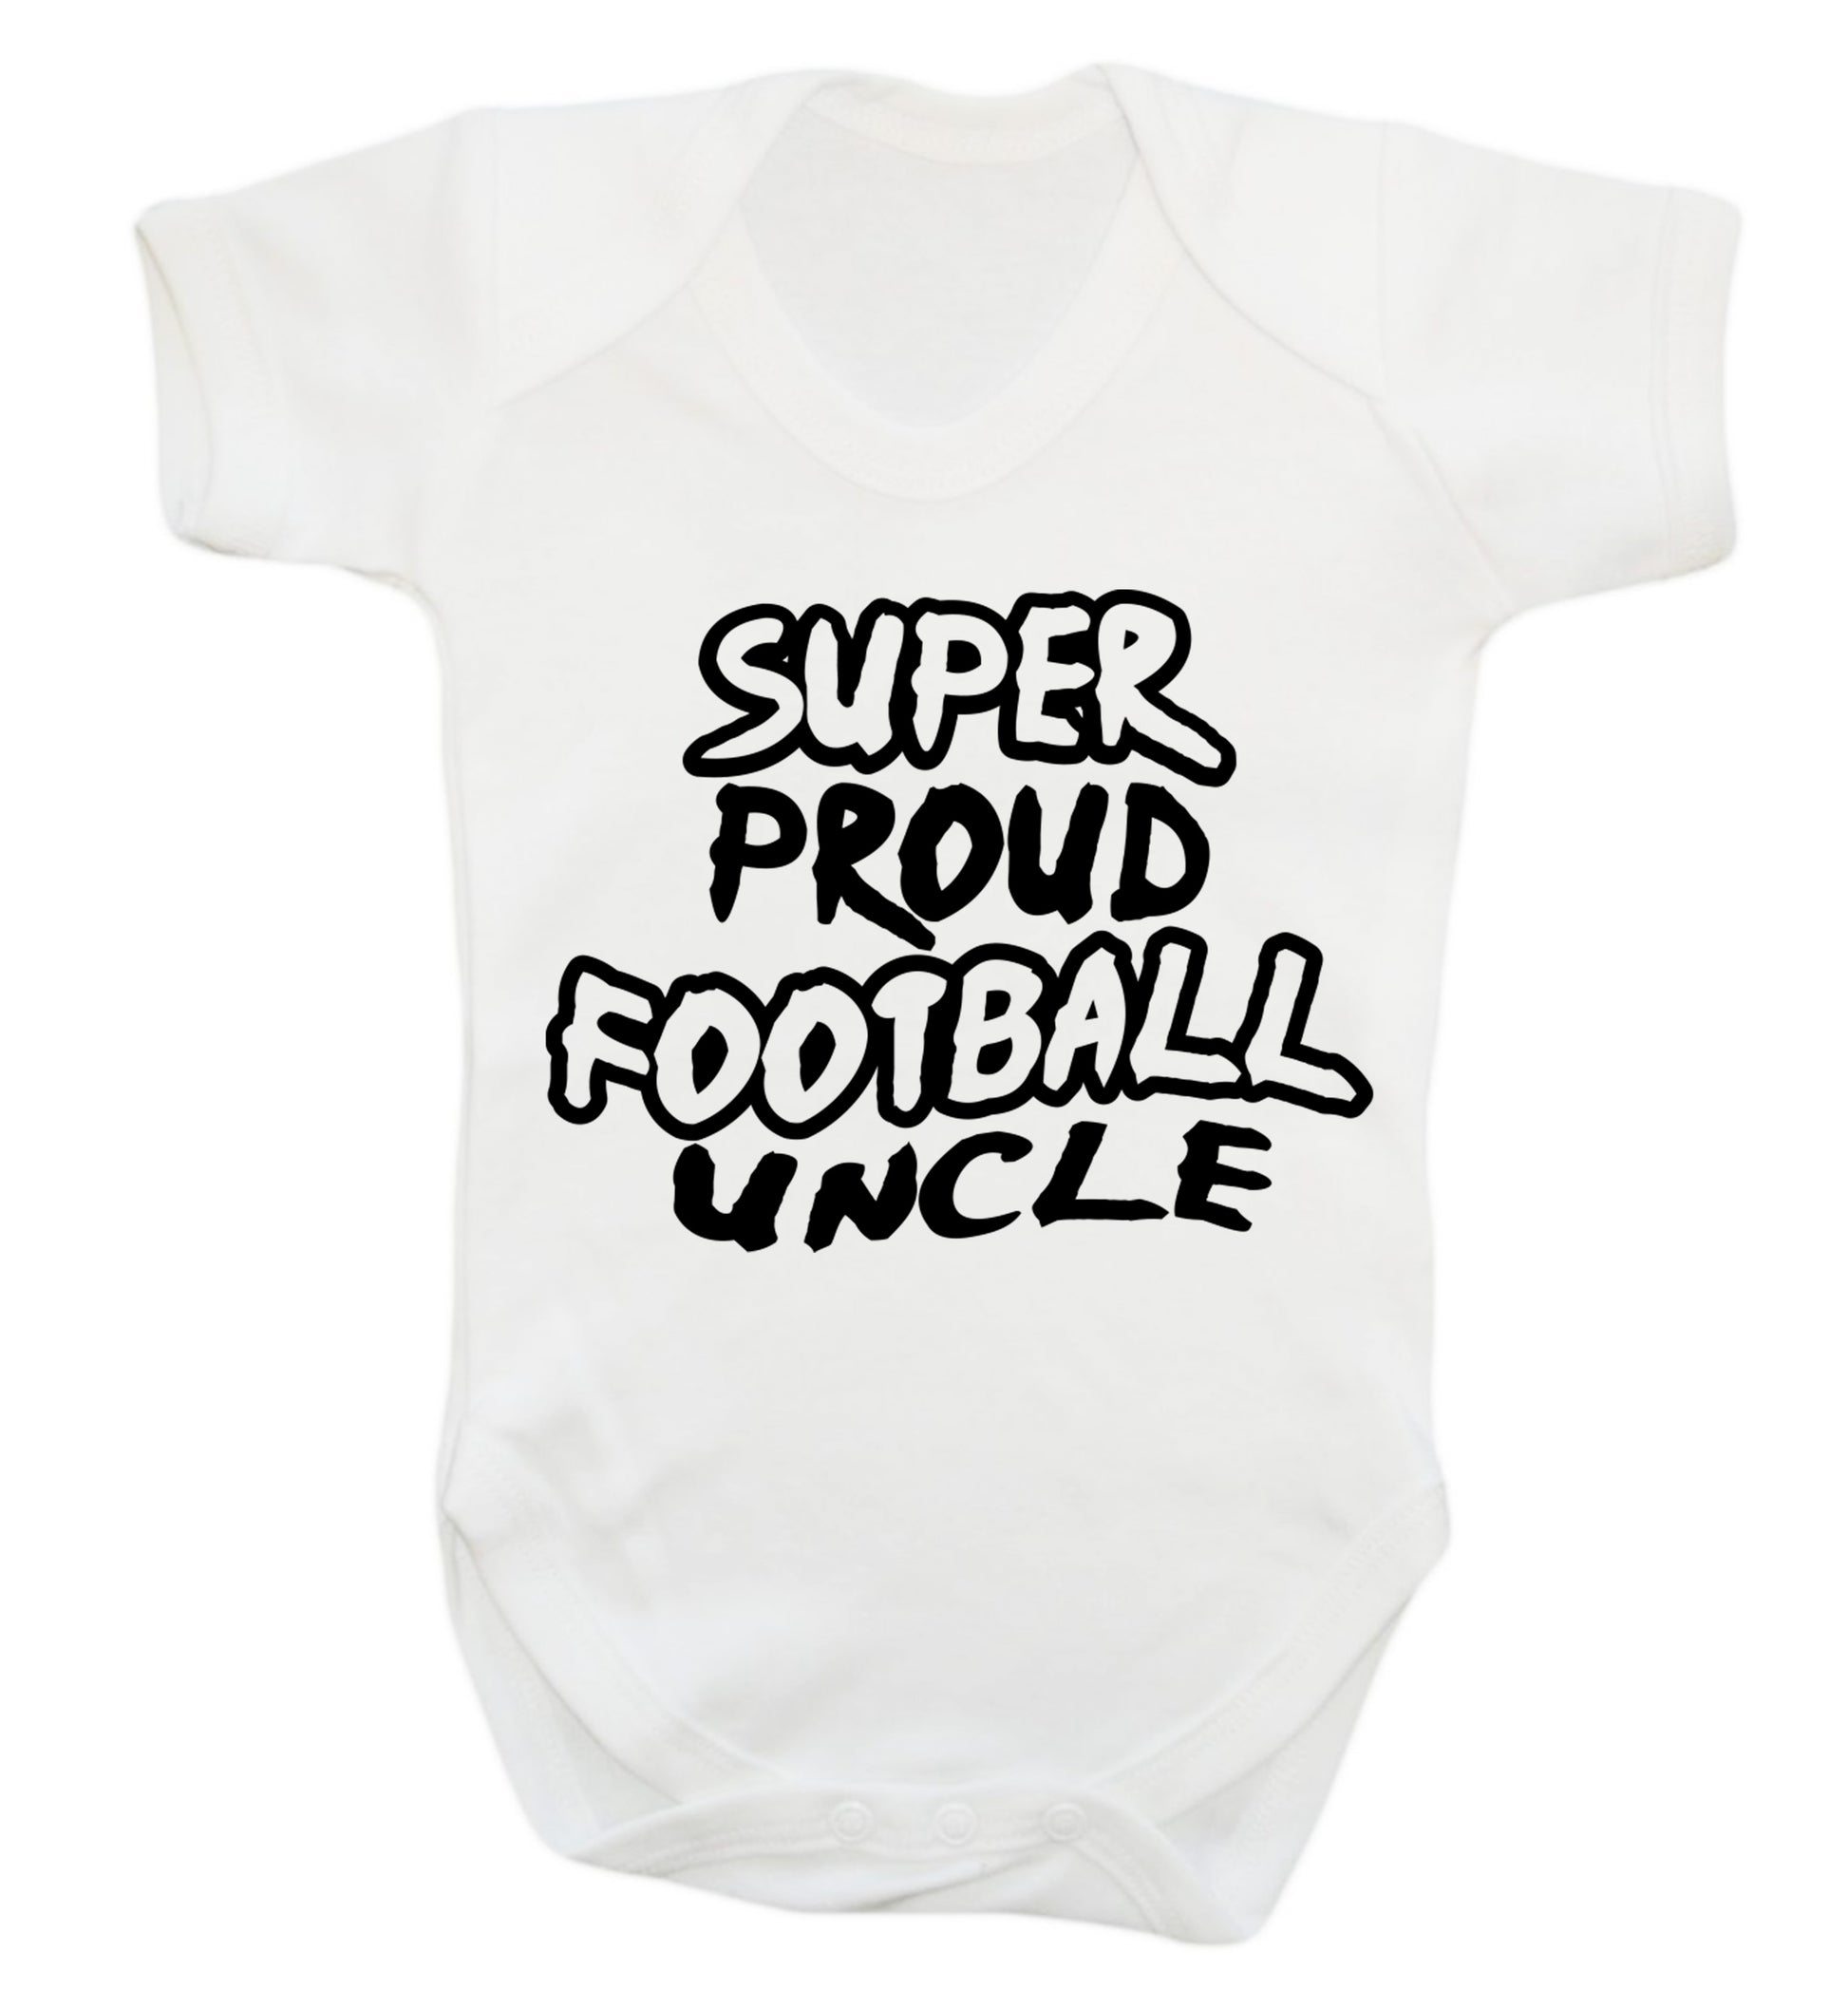 Super proud football uncle Baby Vest white 18-24 months